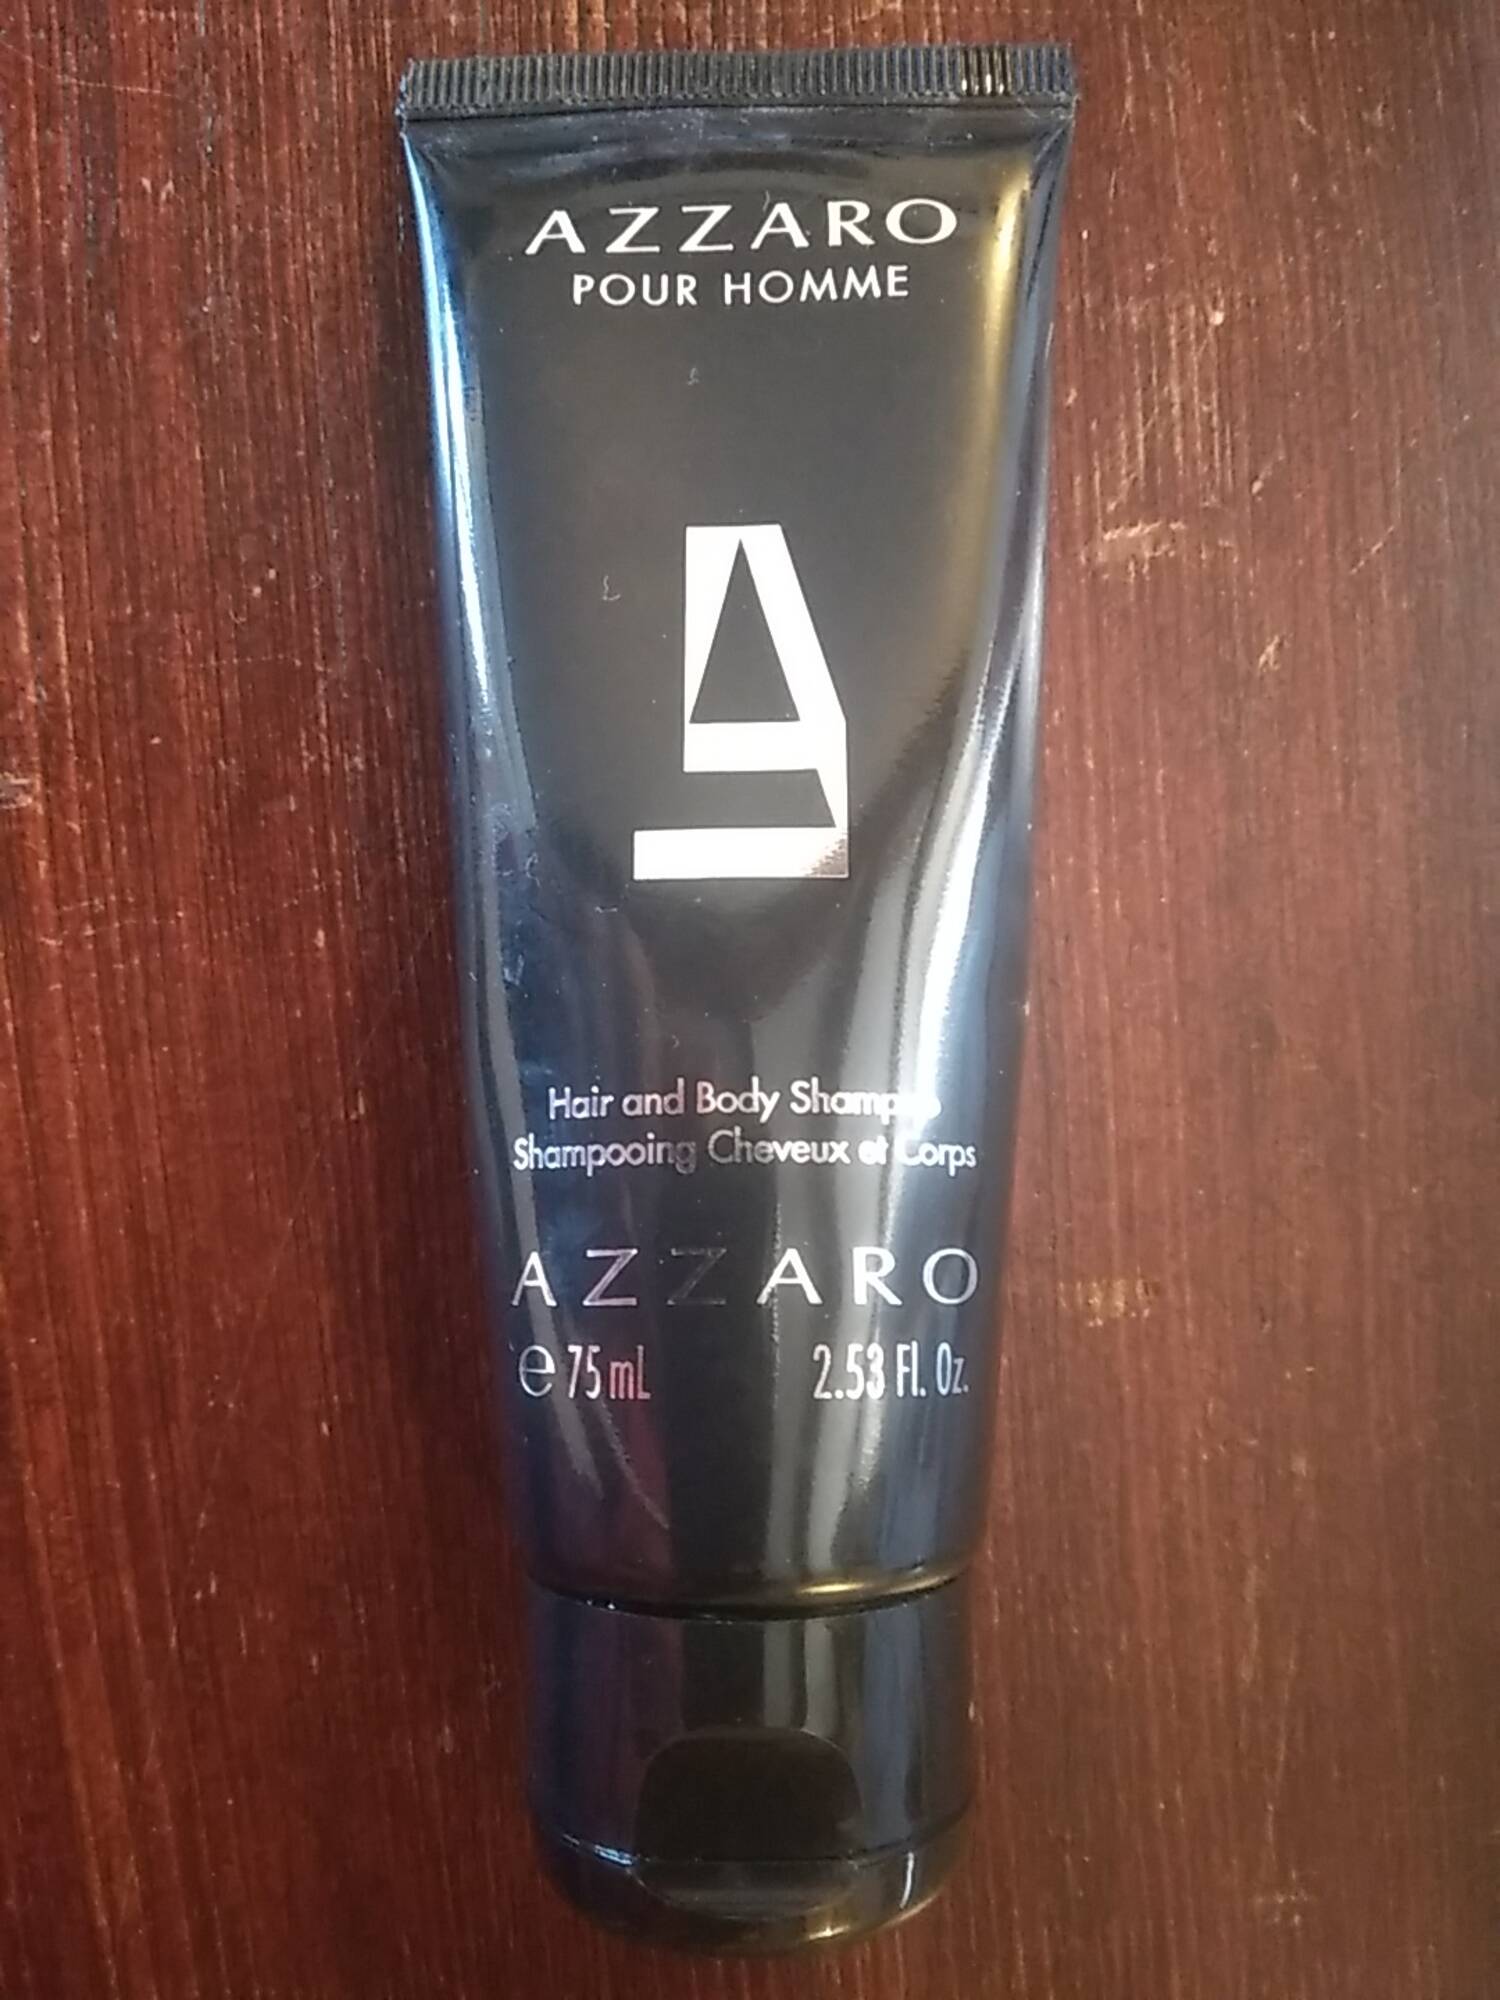 AZZARO - Shampooing cheveux et corps pour homme